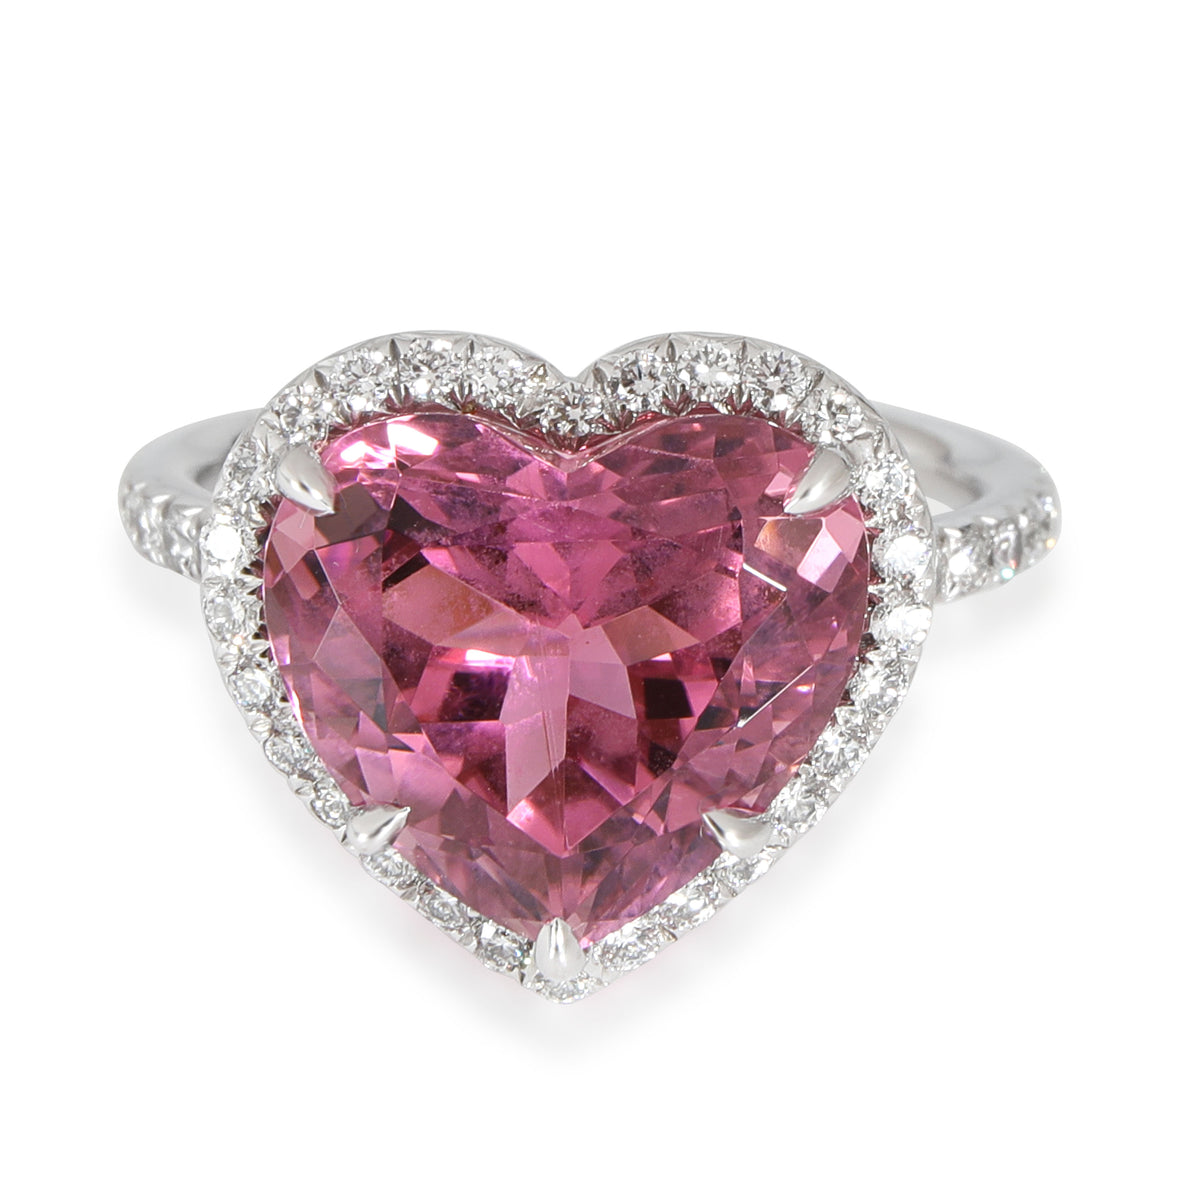 Tiffany's Soleste Pink Diamond Pendant